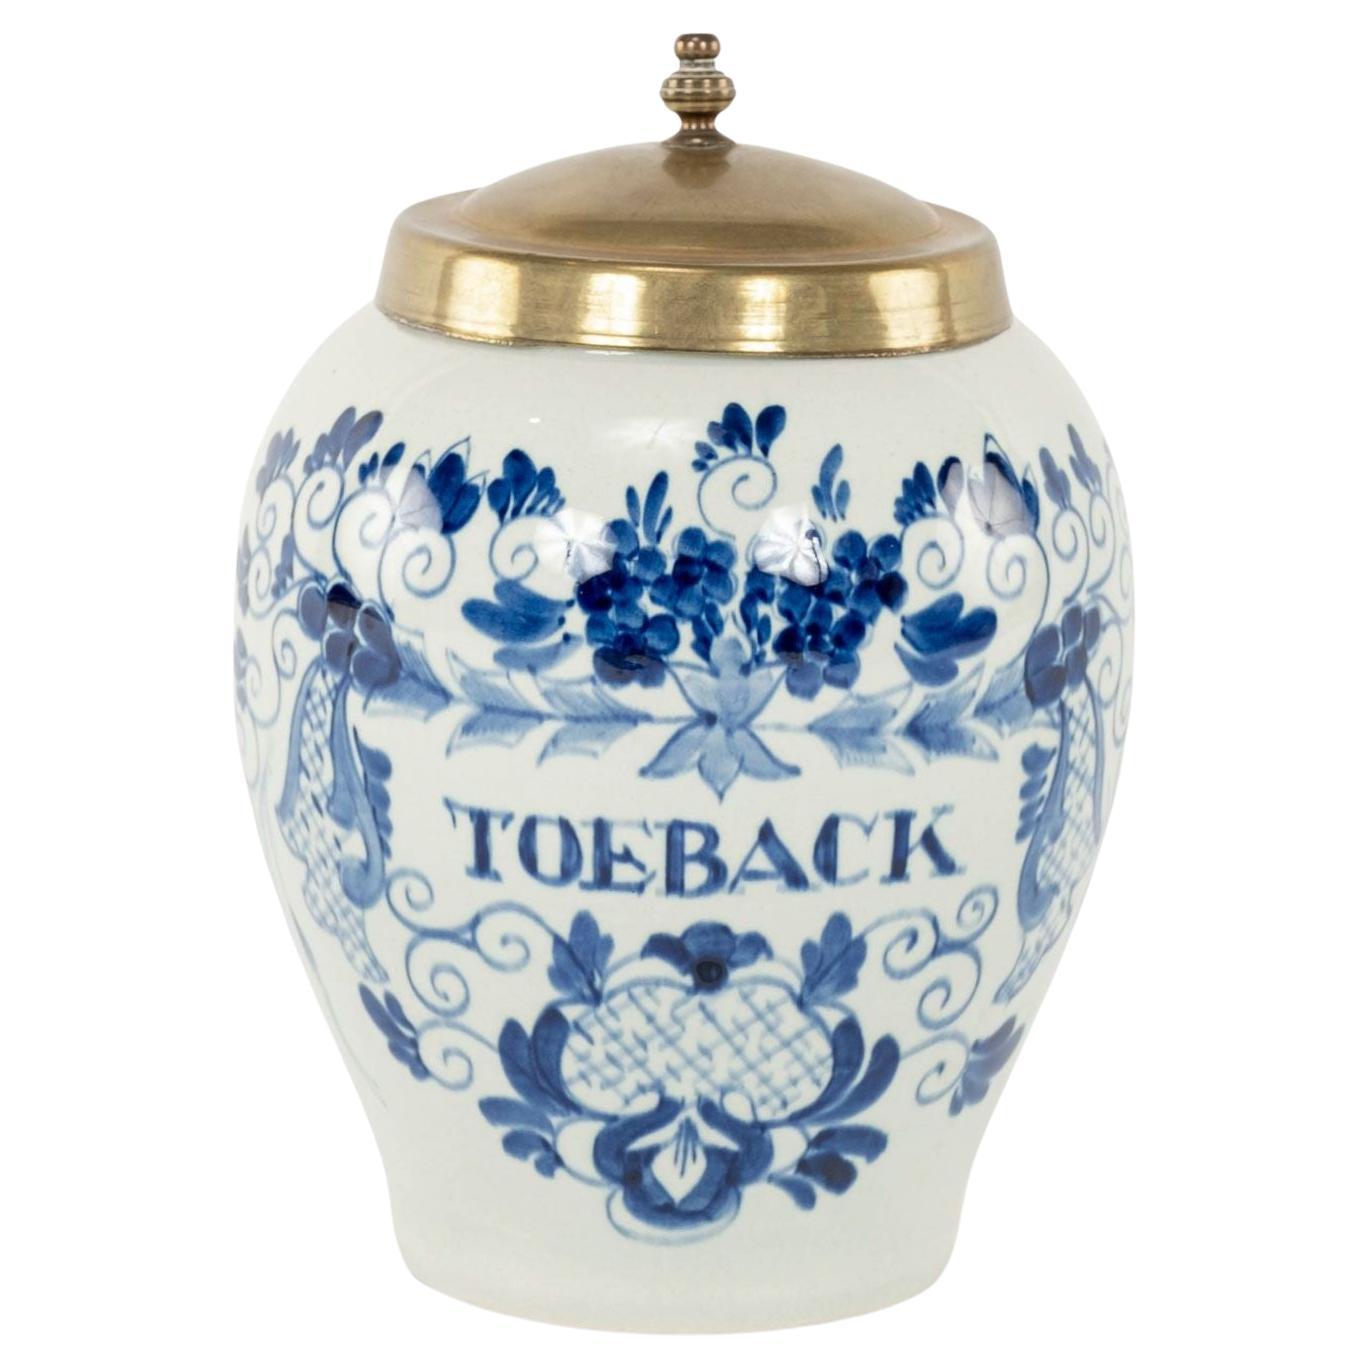 Delft Blue and White "Toeback" Tobacco Jar